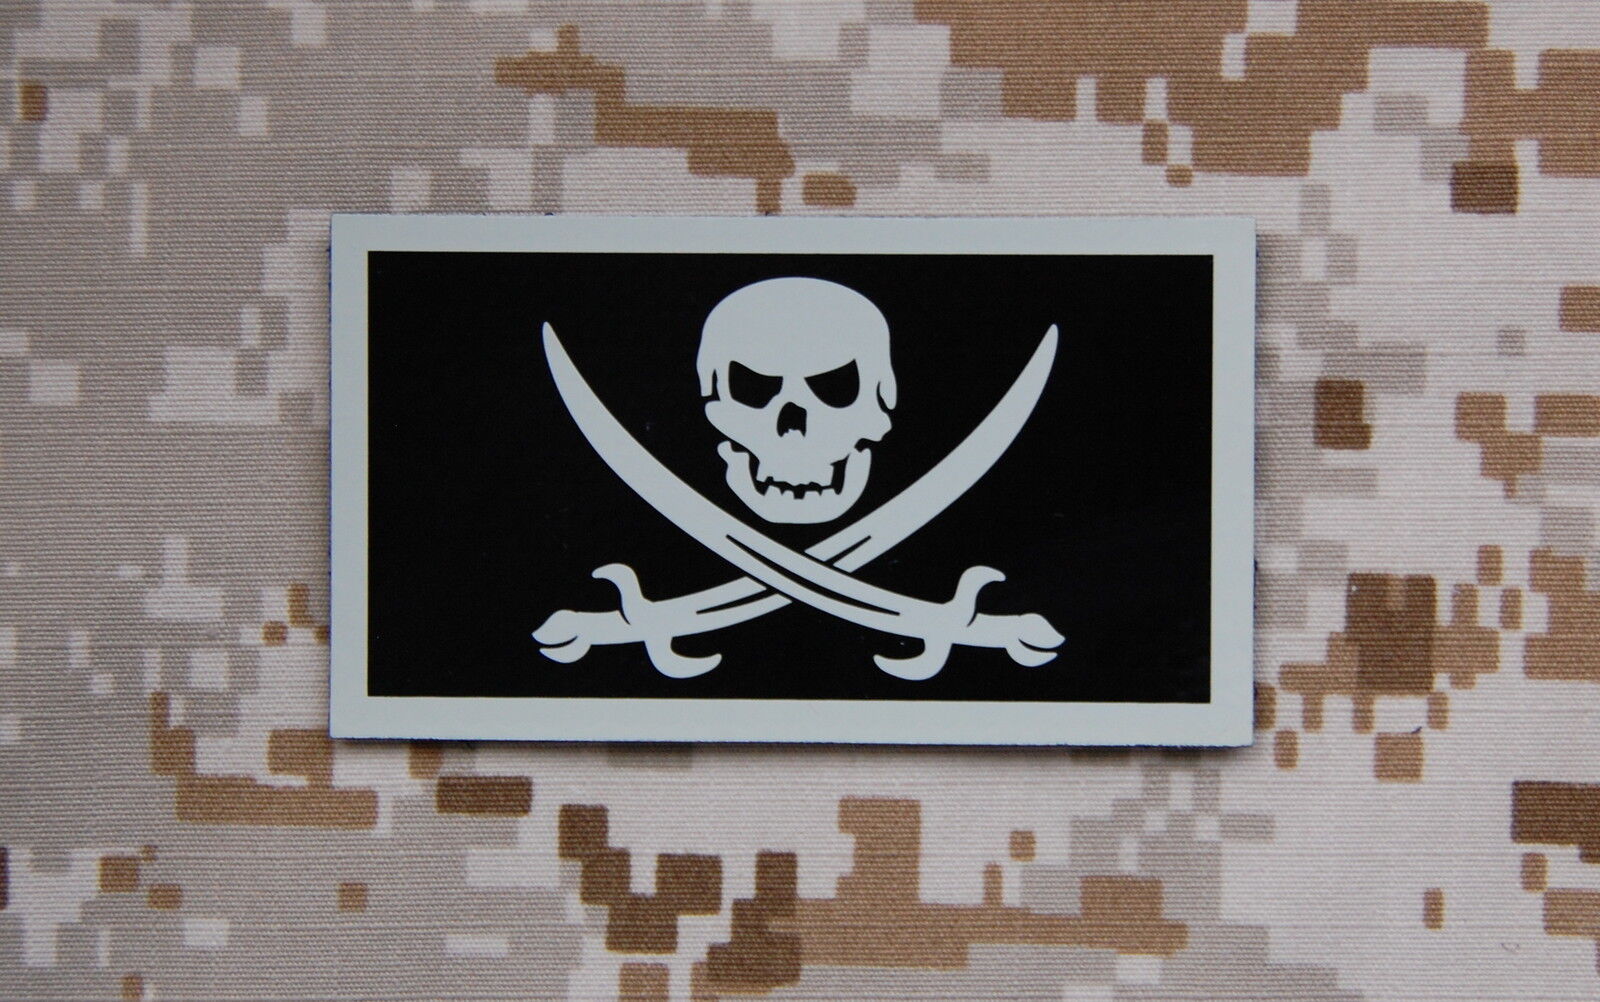 Infrared Calico Jack Patch AOR1 IR US Navy SEAL Pirate ST6 NSWDG DEVGRU 